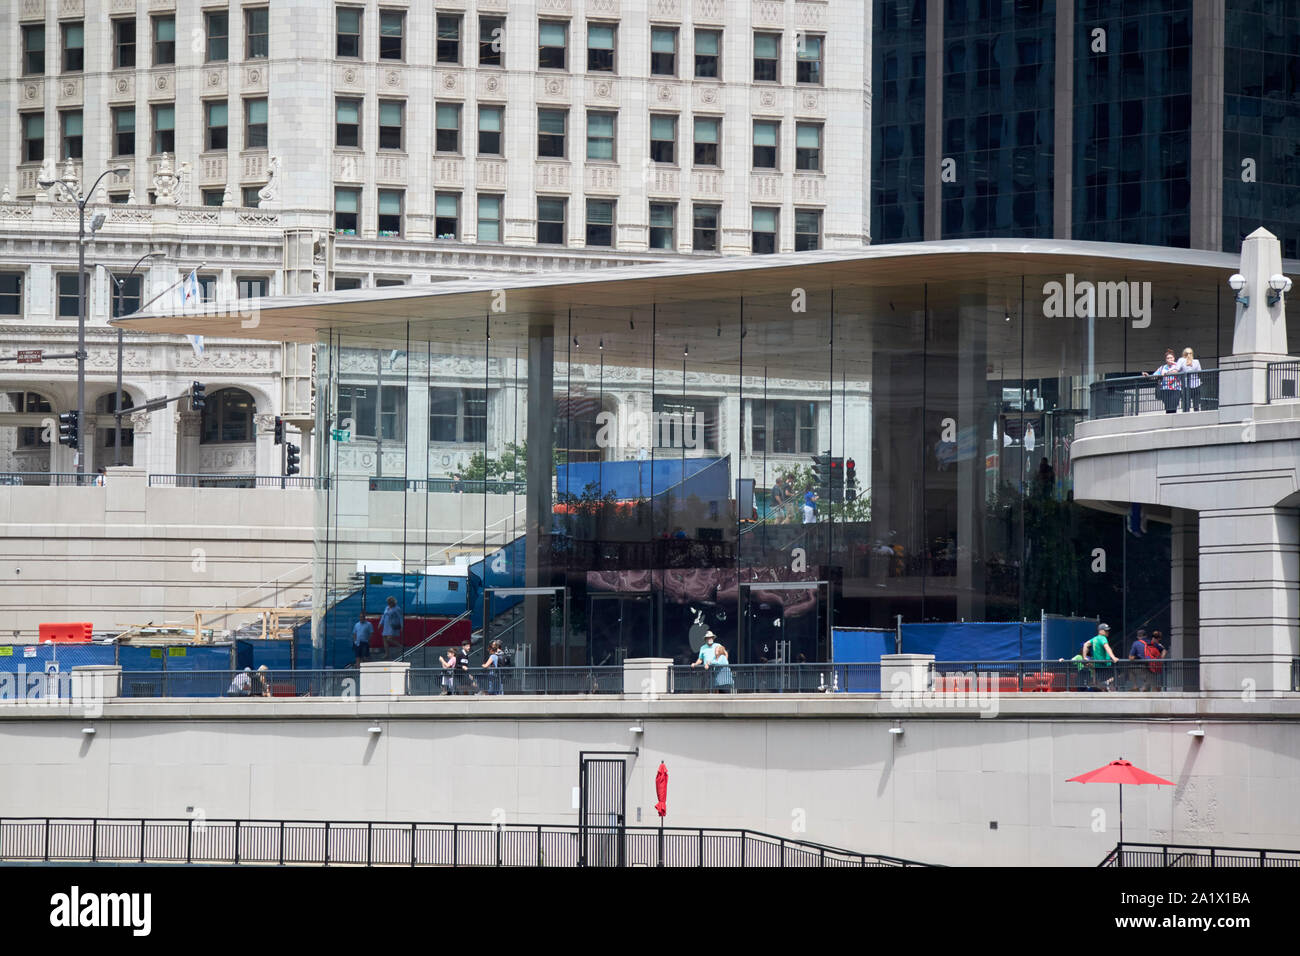 Apple Michigan Avenue opens tomorrow on Chicago's riverfront - Apple